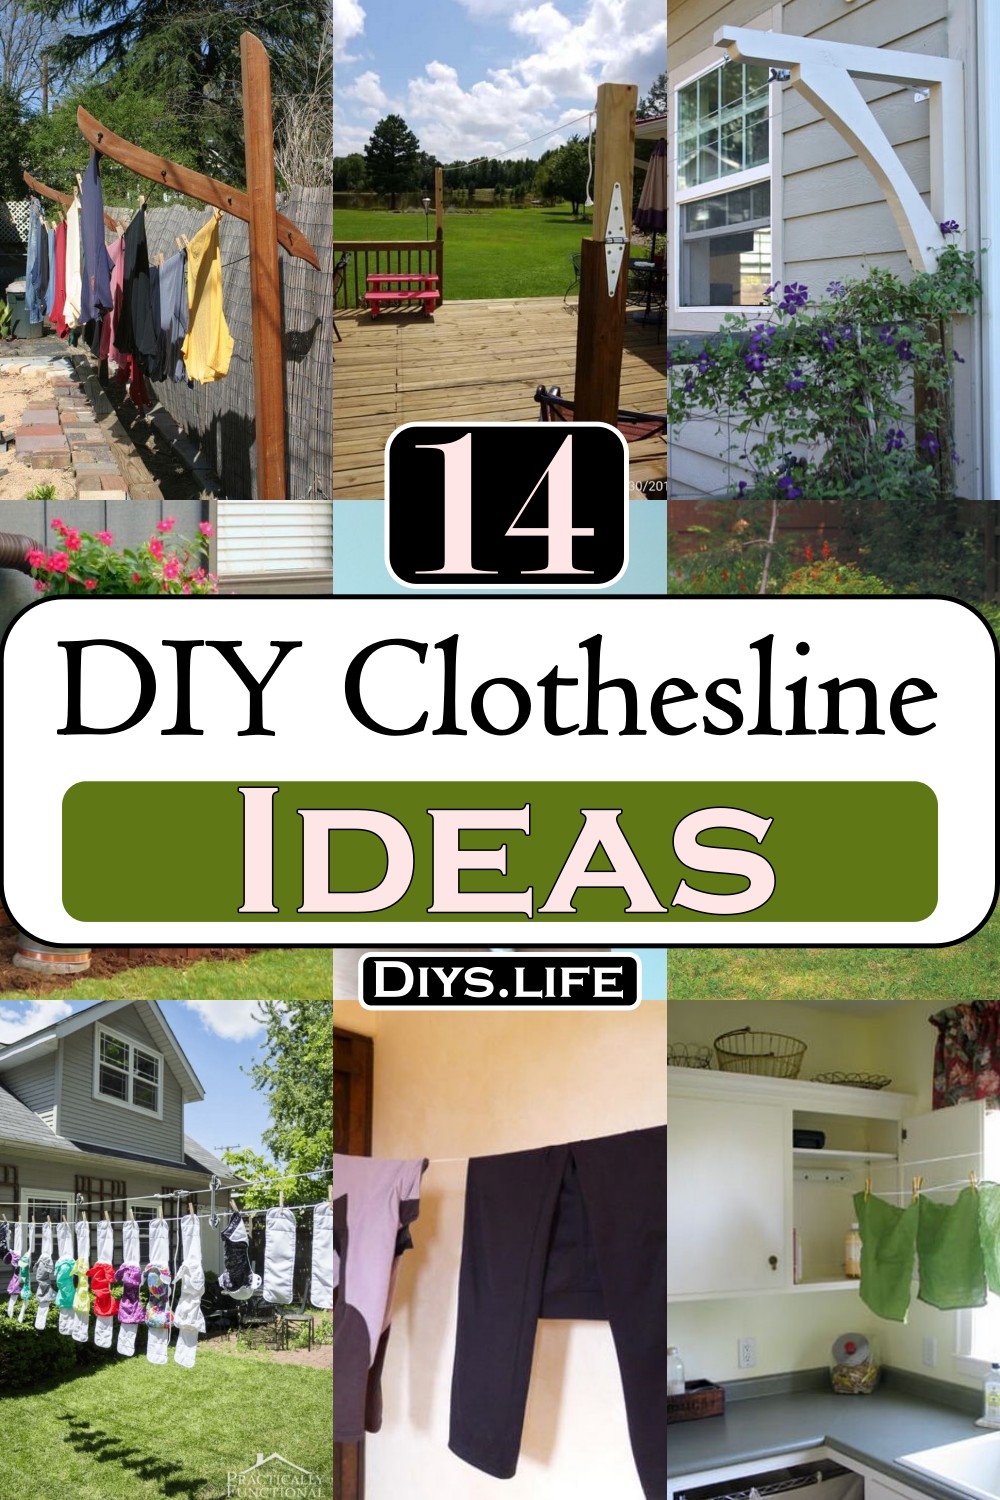 DIY Clothesline Ideas